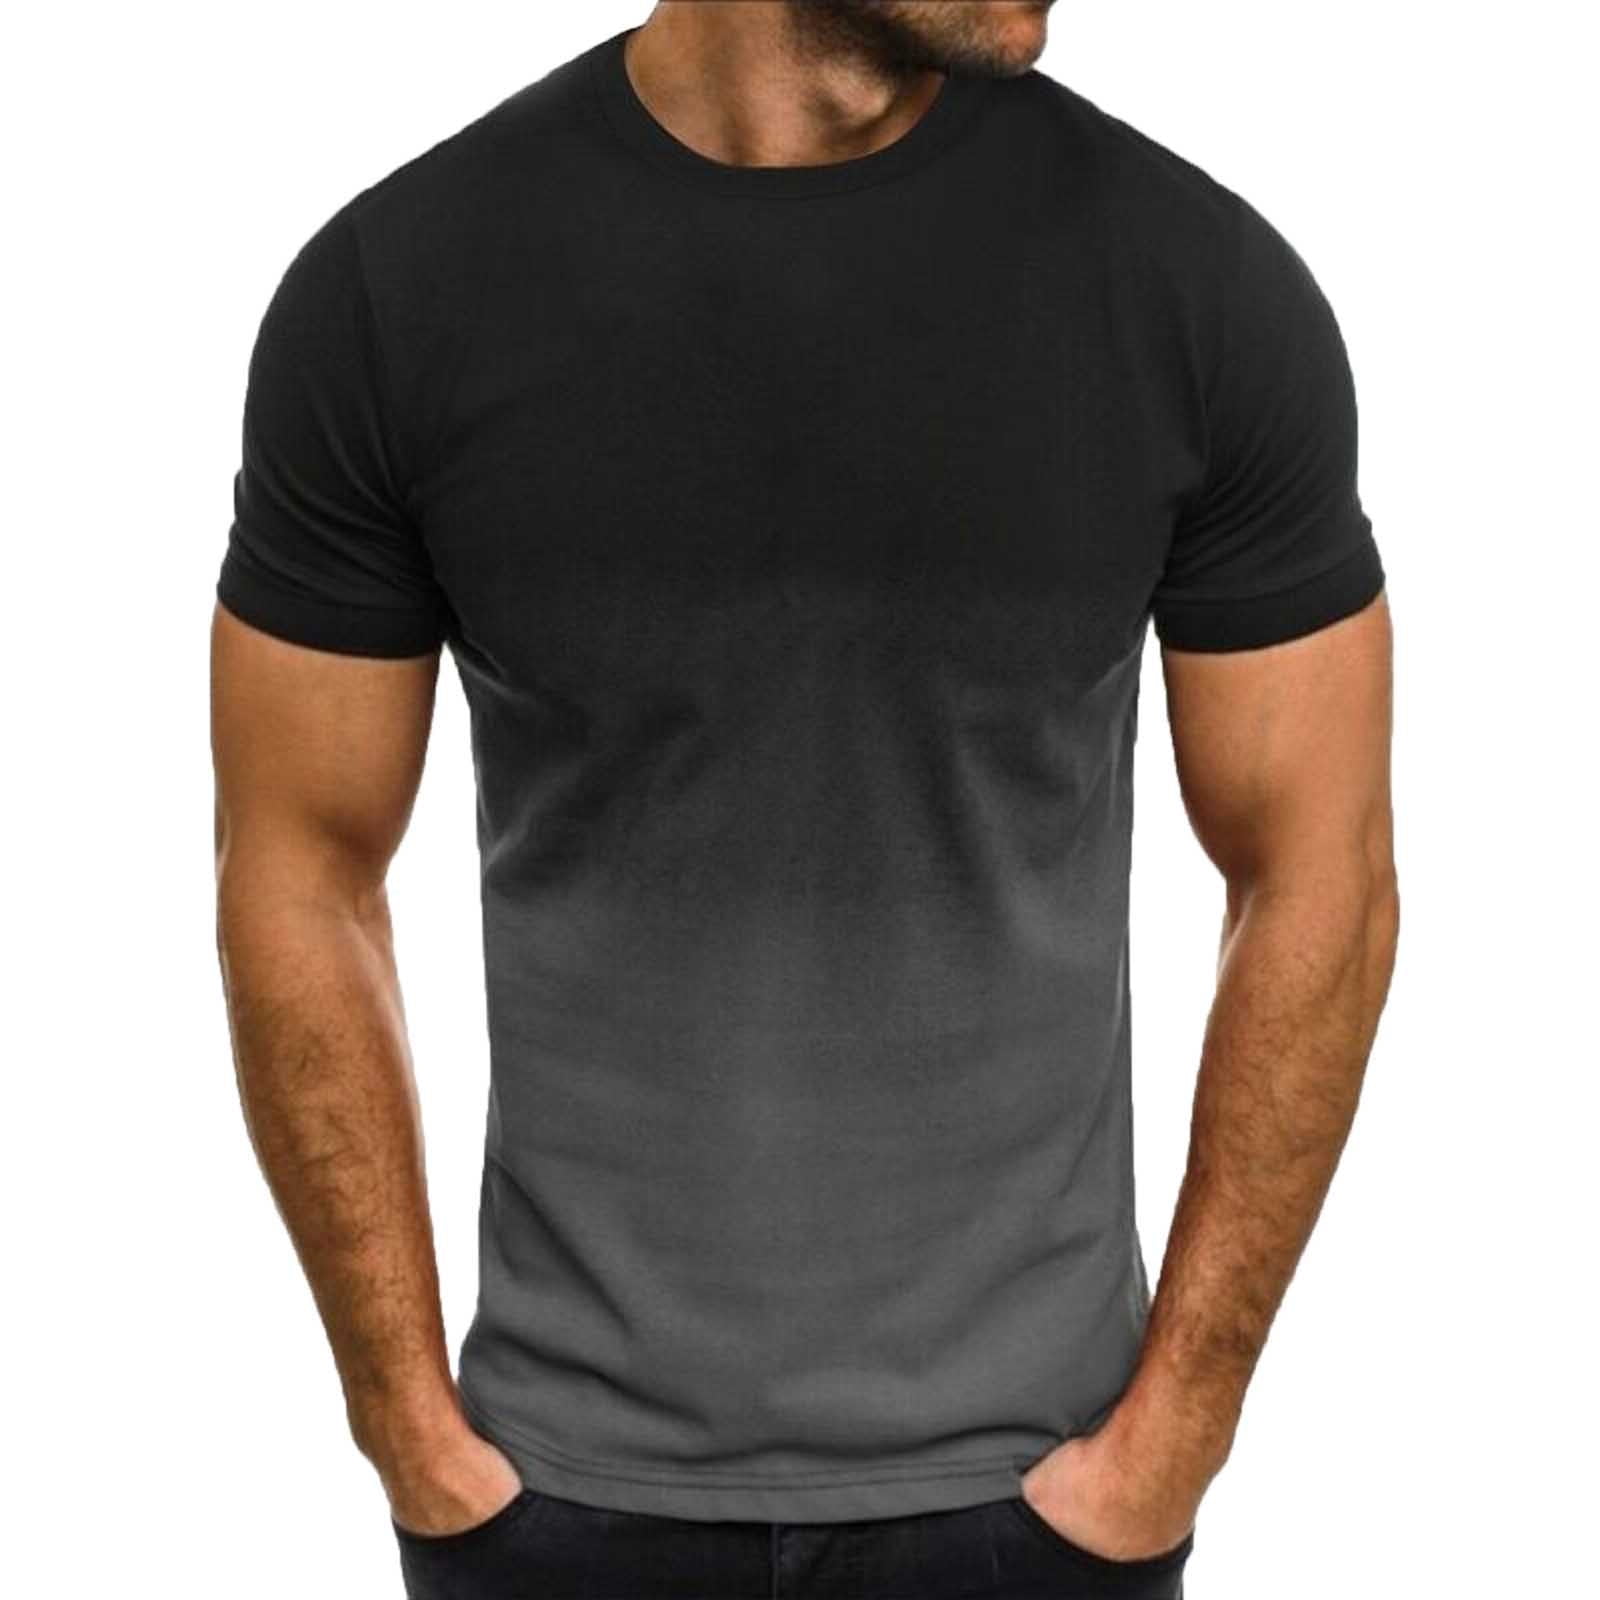 Homadles Soft Style T-Shirt for Men- Round Neck On Sale Black Size L ...